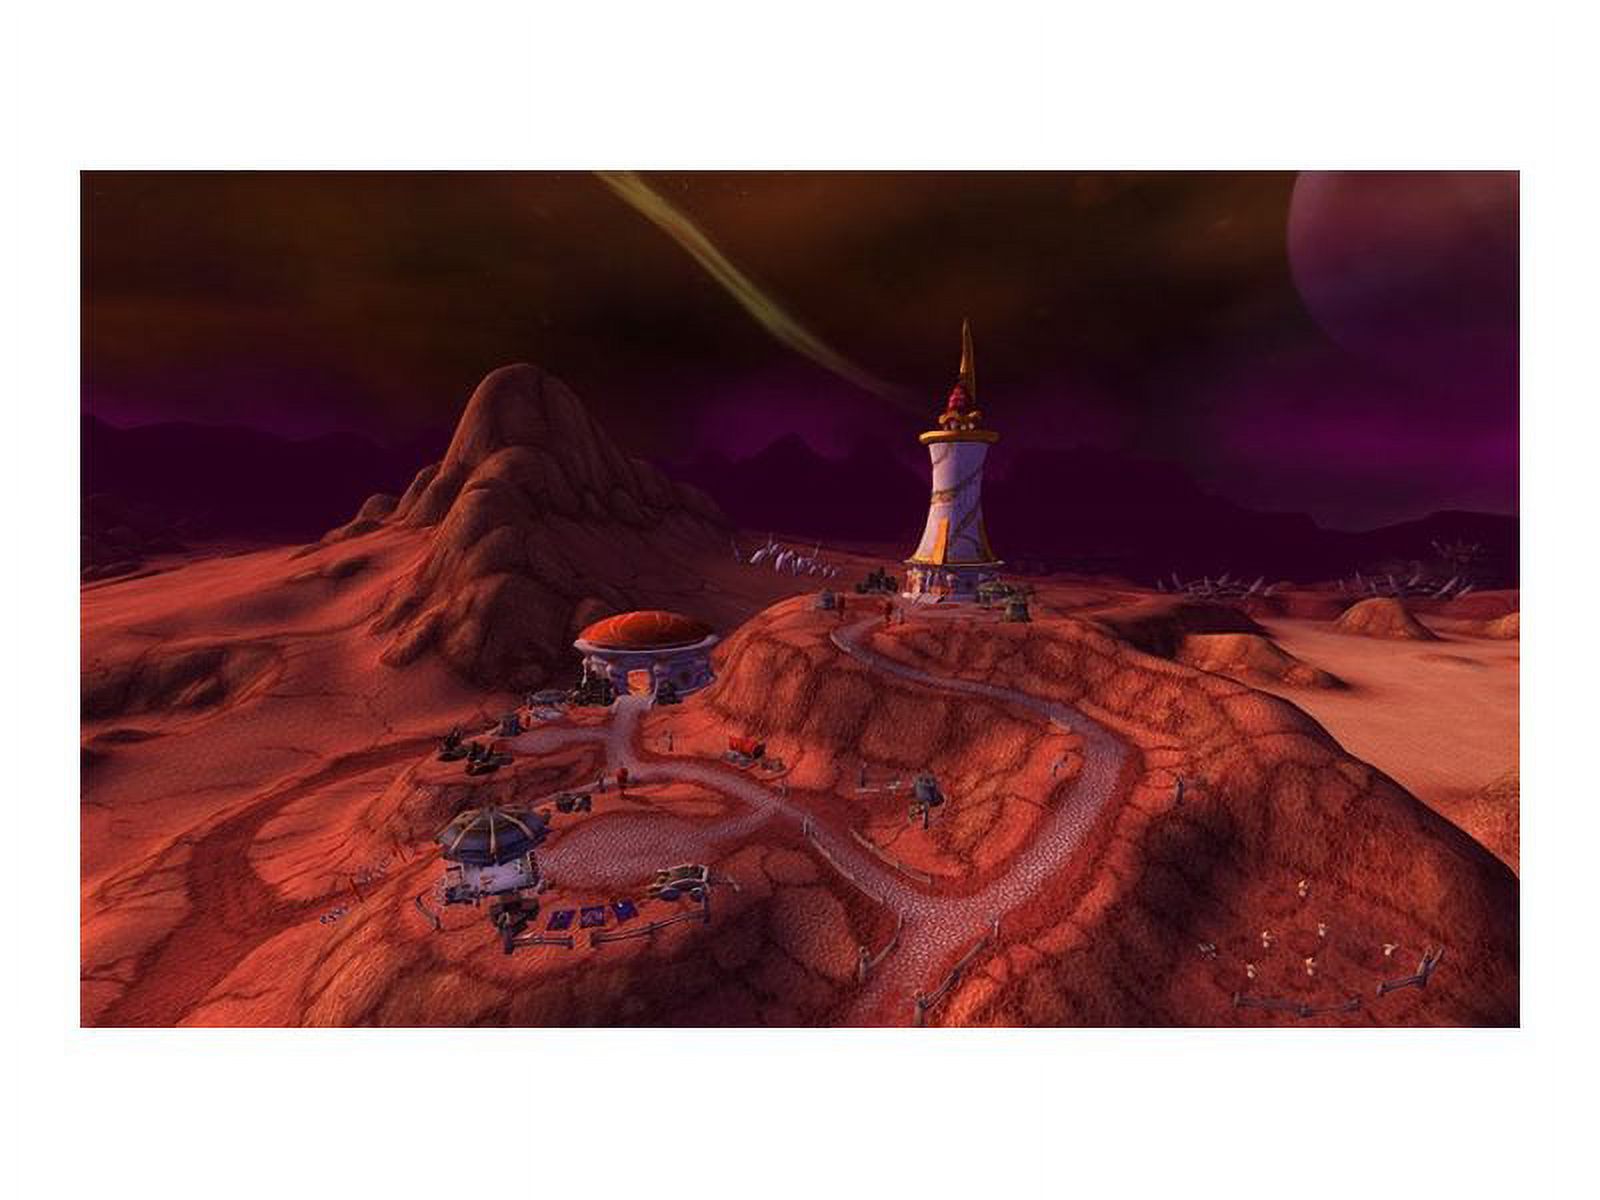 World of Warcraft: Mists of Pandaria - image 4 of 15